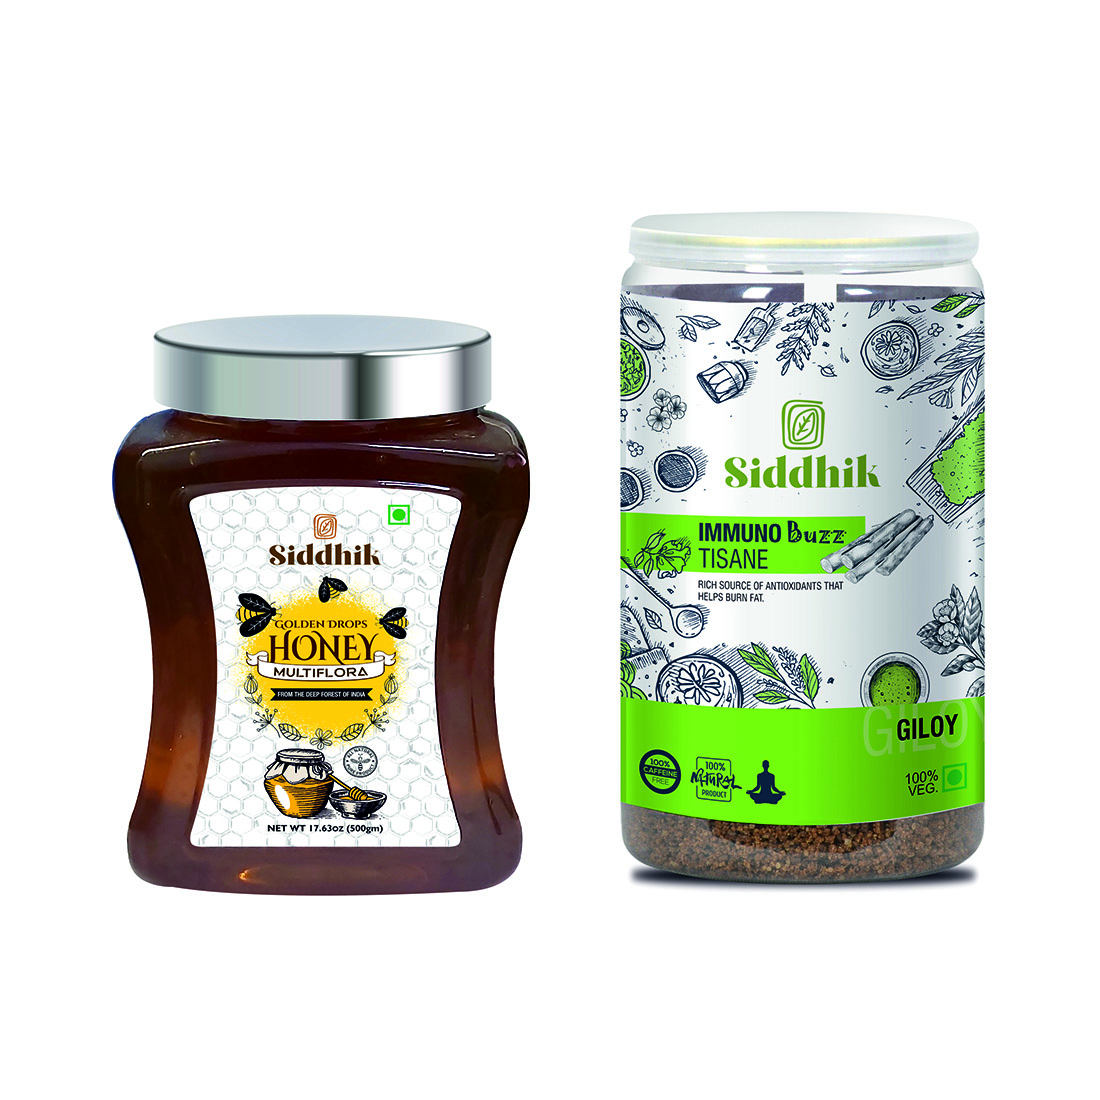 Siddhik Golden Drops Multiflora Honey 500 grams with Immuno Buzz Giloy Tea Rich source of antioxidants that helps burn fat 250 grams